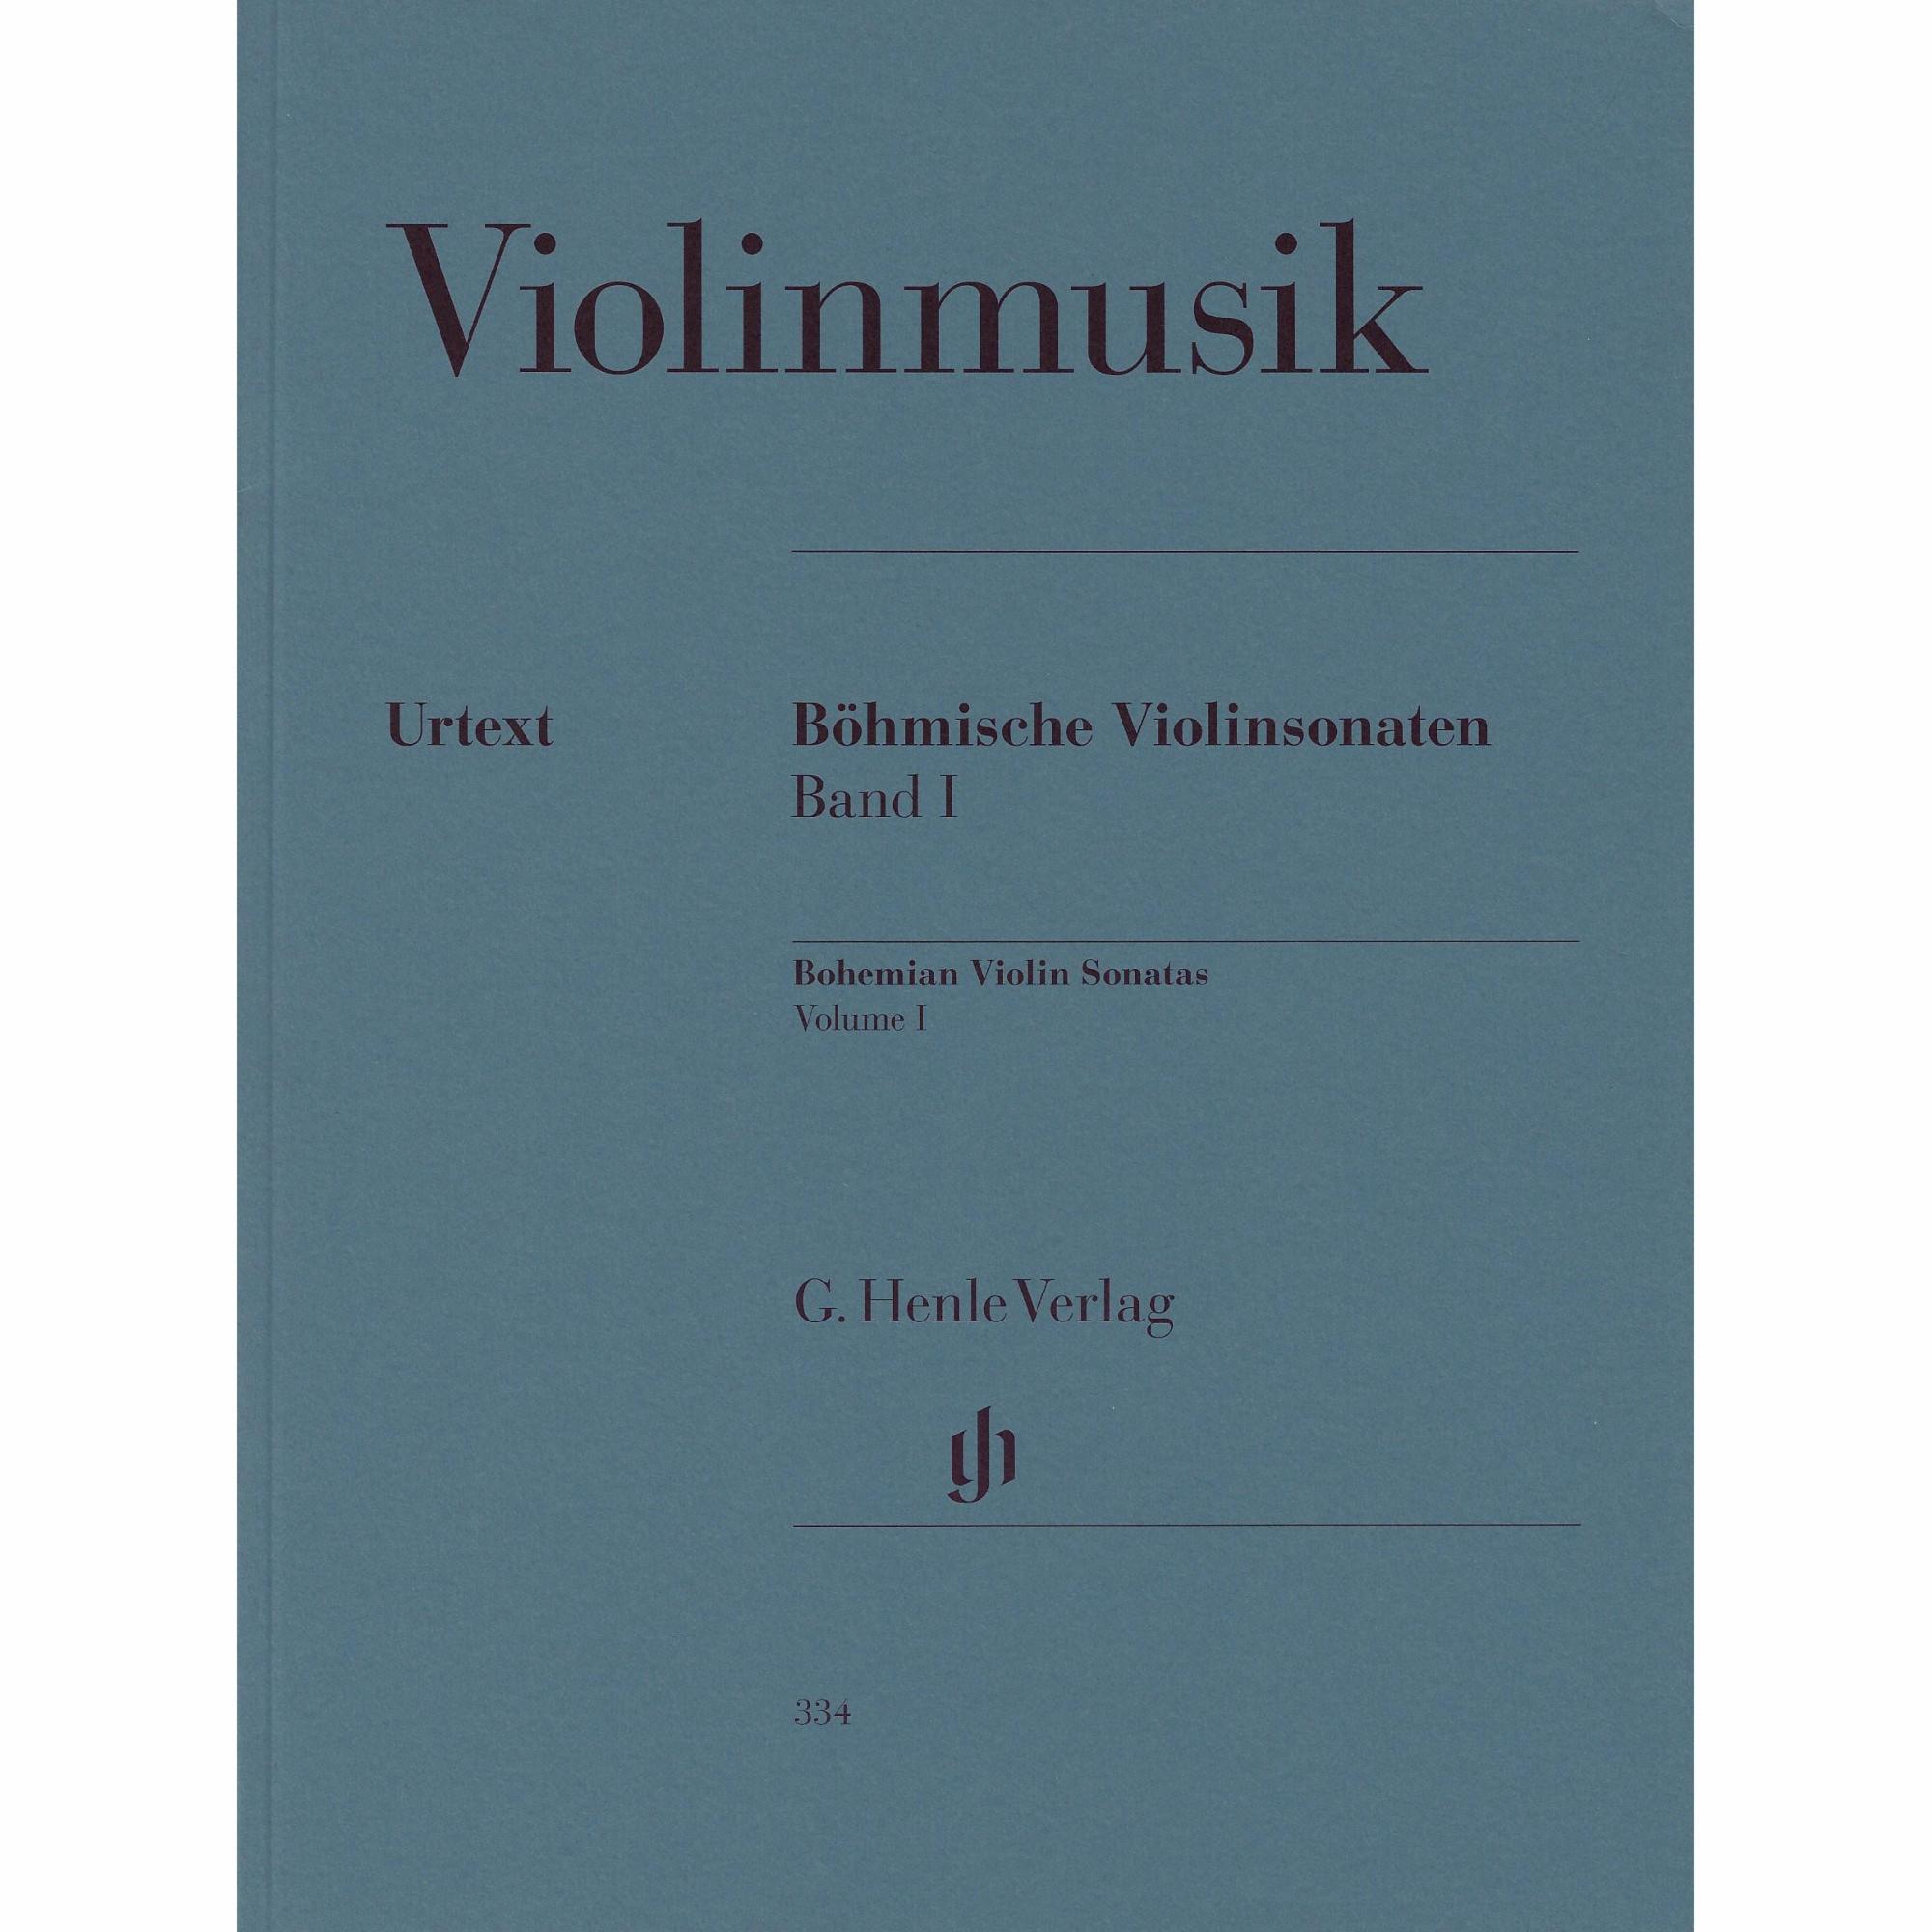 Bohemian Violin Sonatas, Volumes I & II